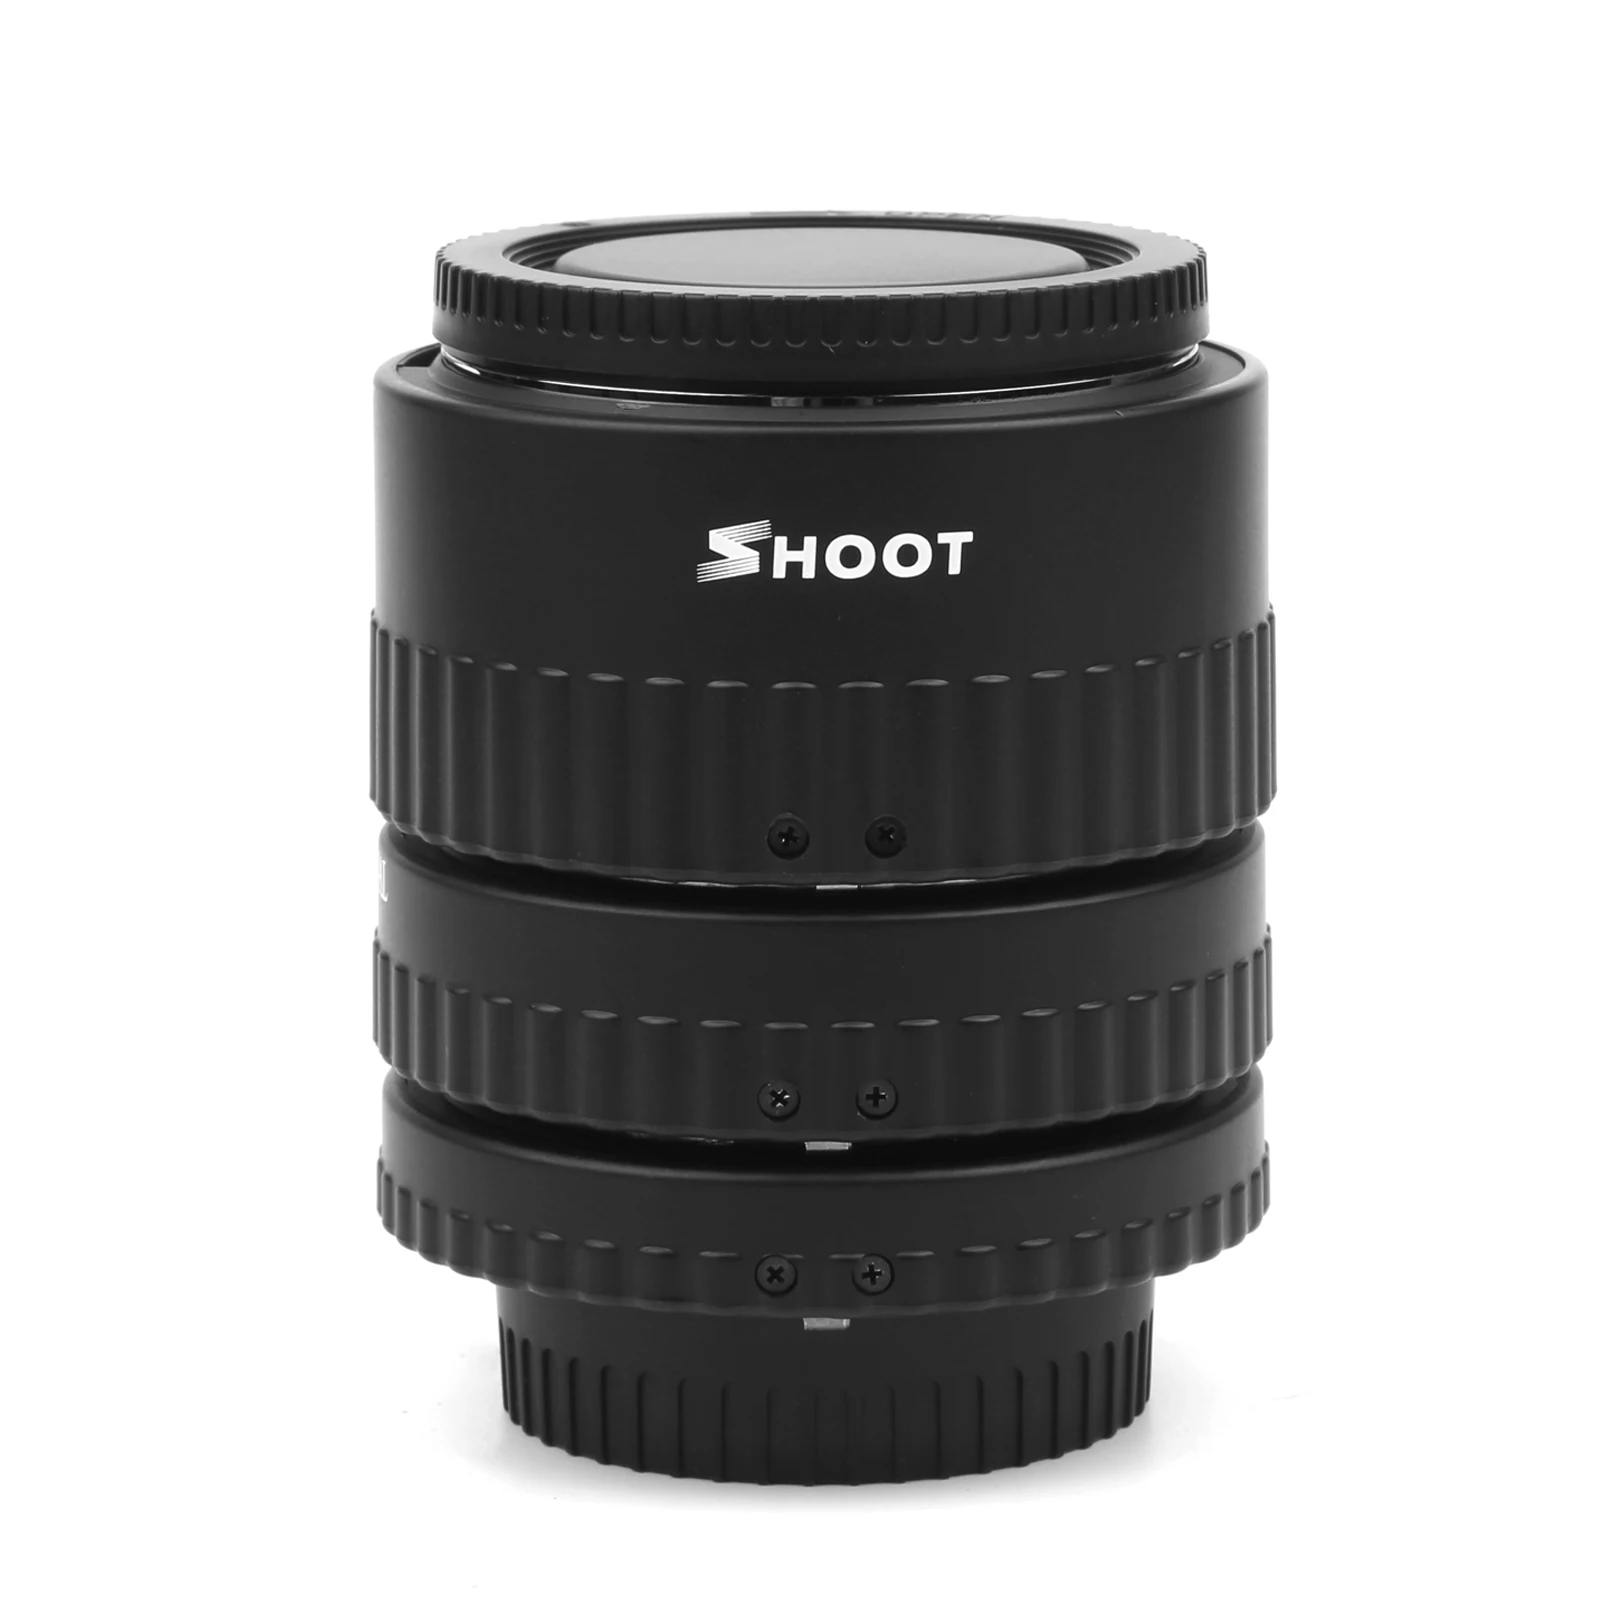 

SHOOT Auto Focus Macro Extension Tube Set for Nikon D3200 D3300 D5200 D7100 D5300 D7200 D7000 D3100 D90 D5100 D5500 Digital SLR